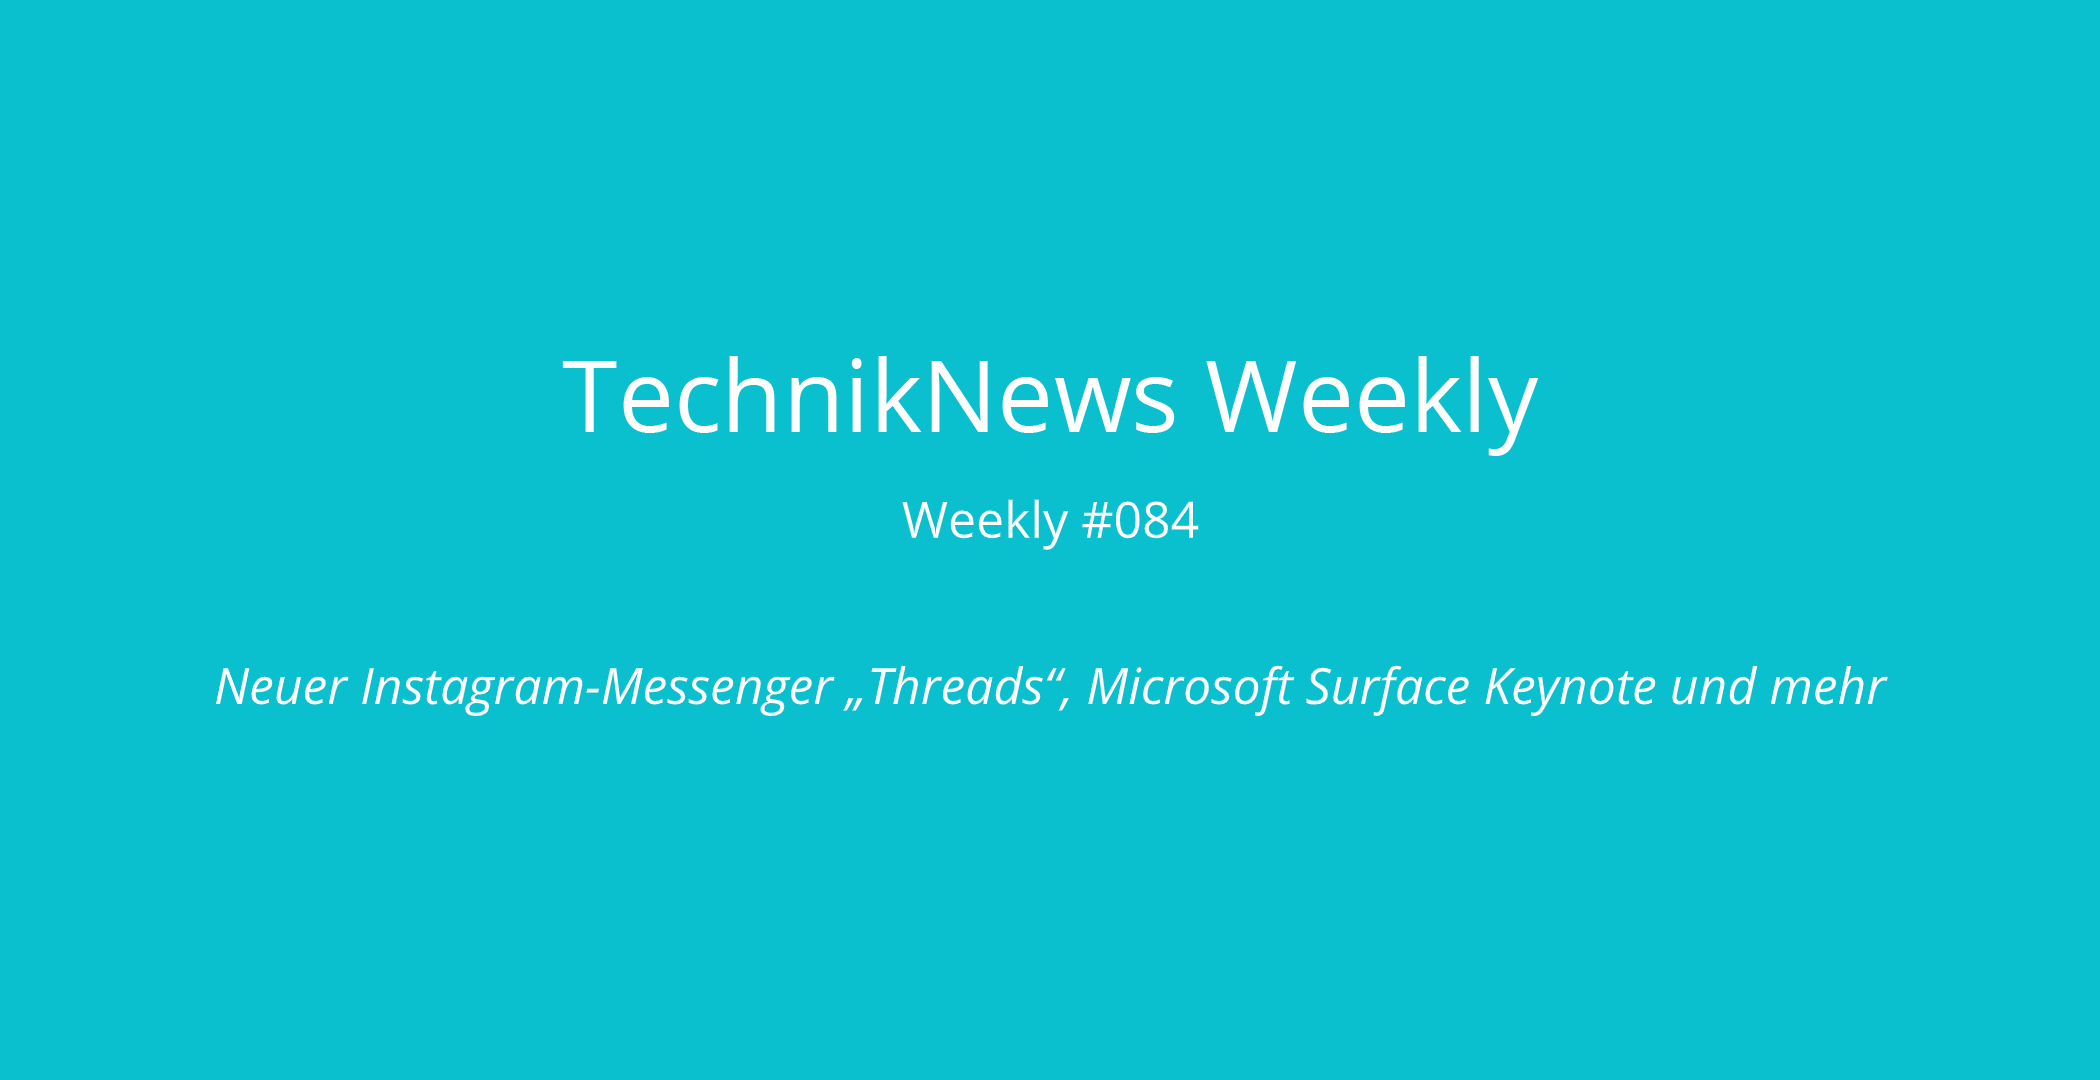 TechnikNews Weekly #084